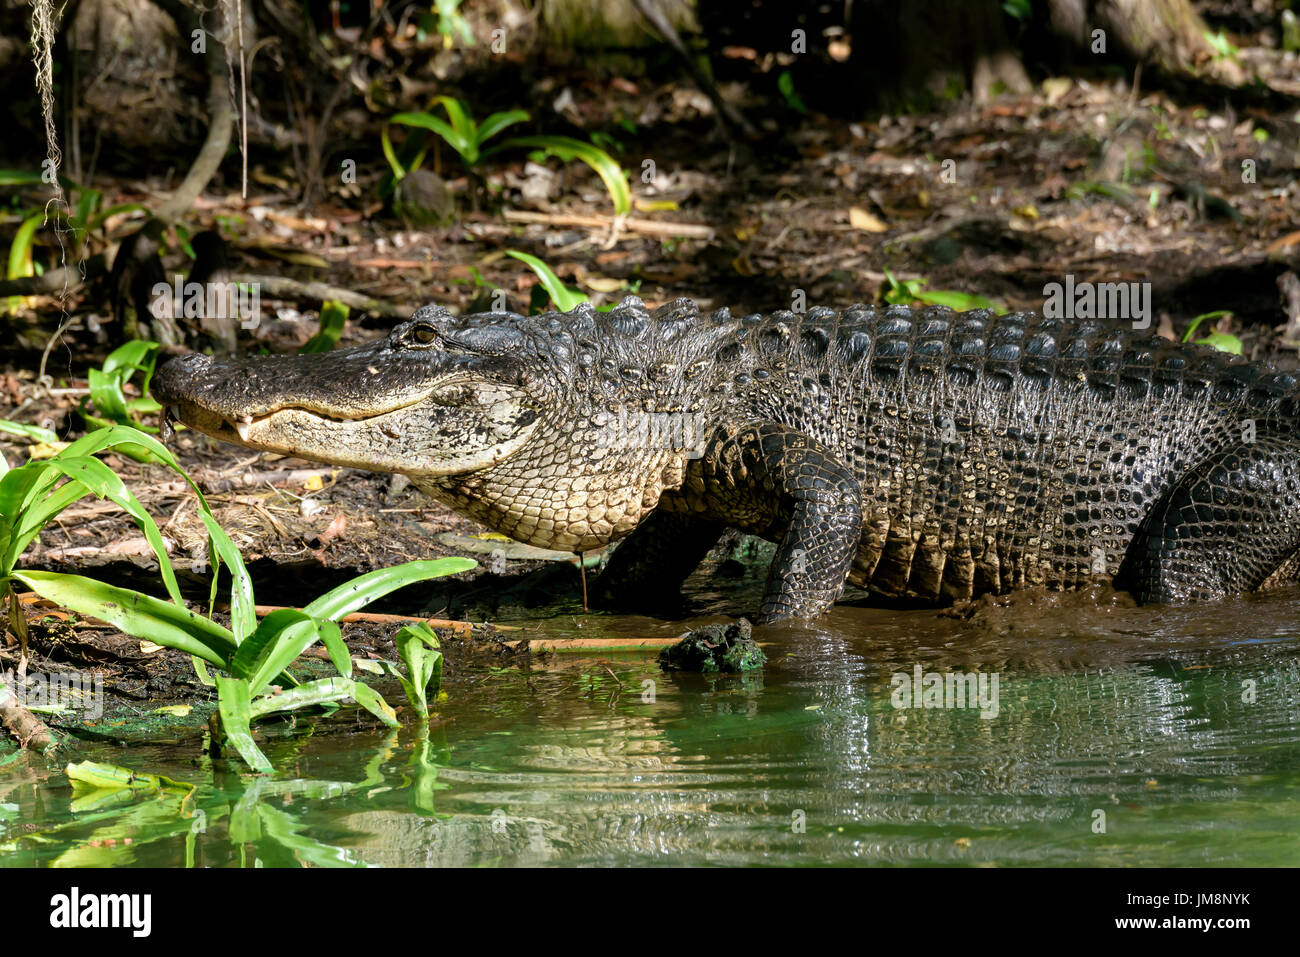 American alligator (Alligator mississippiensis) emerging from water, Big Cypress Bend, Fakahatchee Strand, Florida, USA Stock Photo